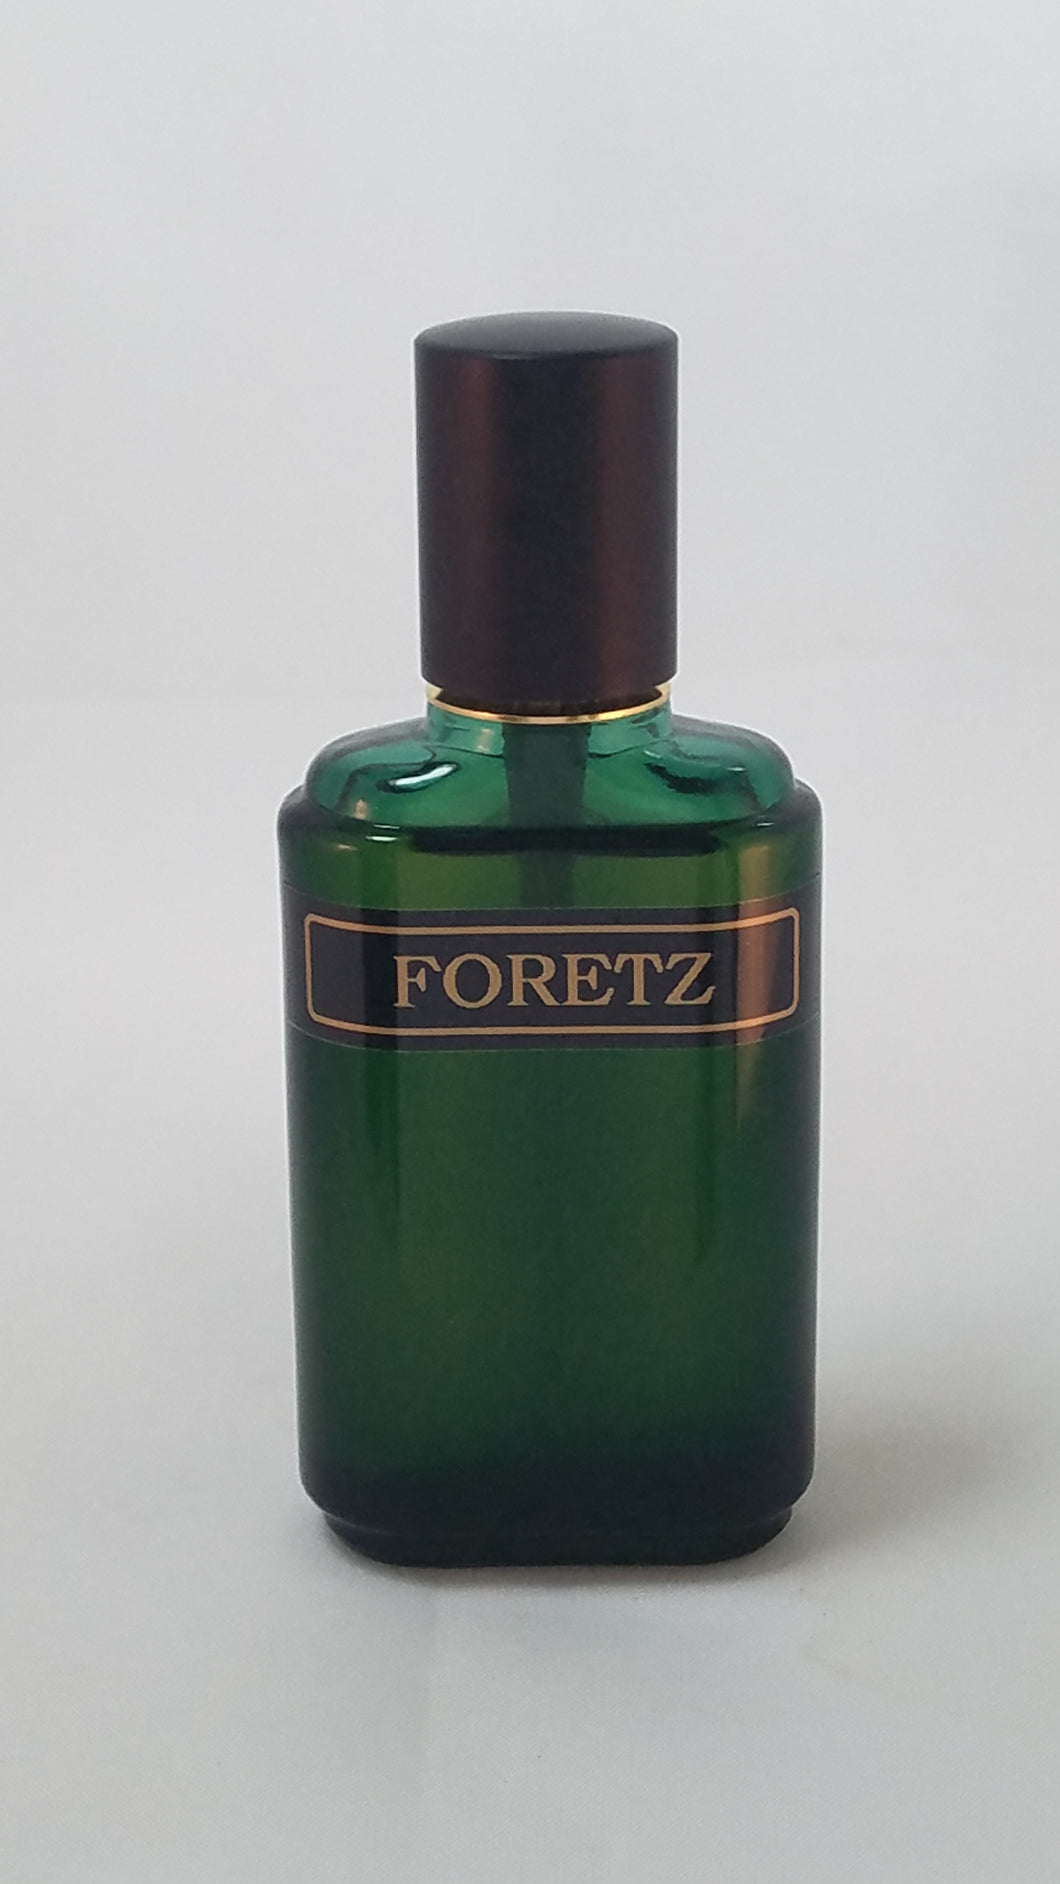 Foretz